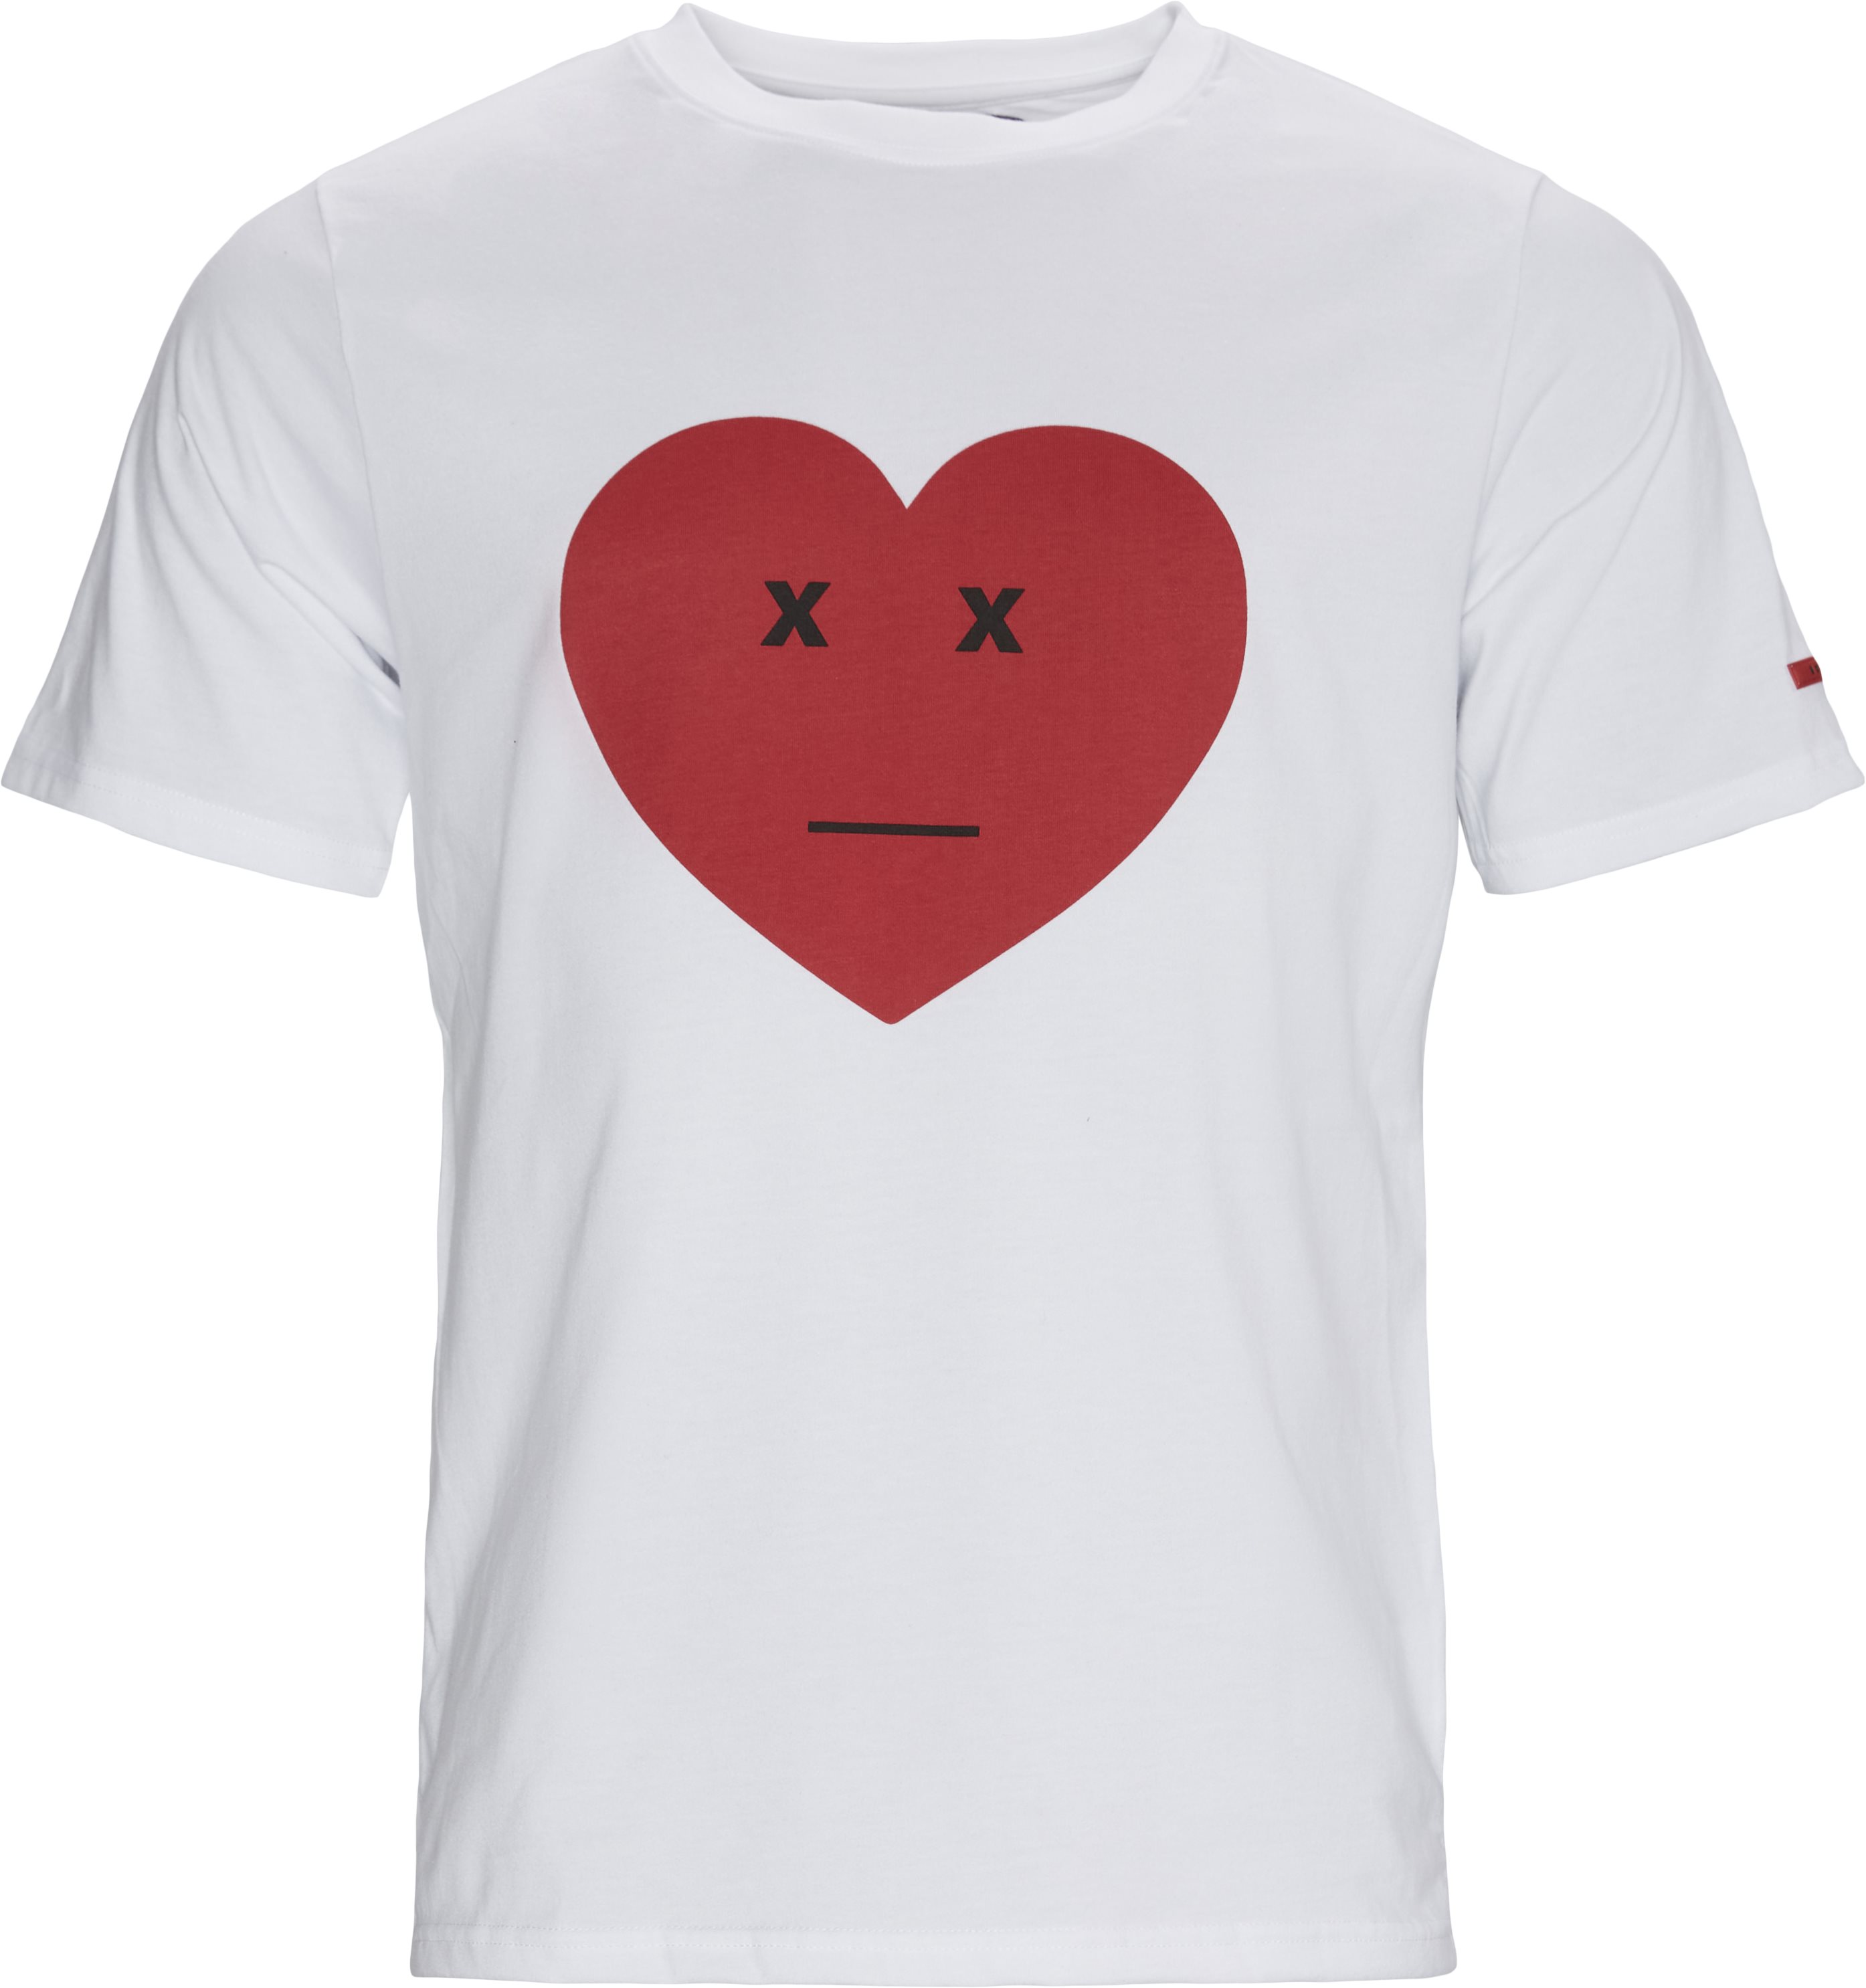 Amor Tee - T-shirts - Regular fit - White